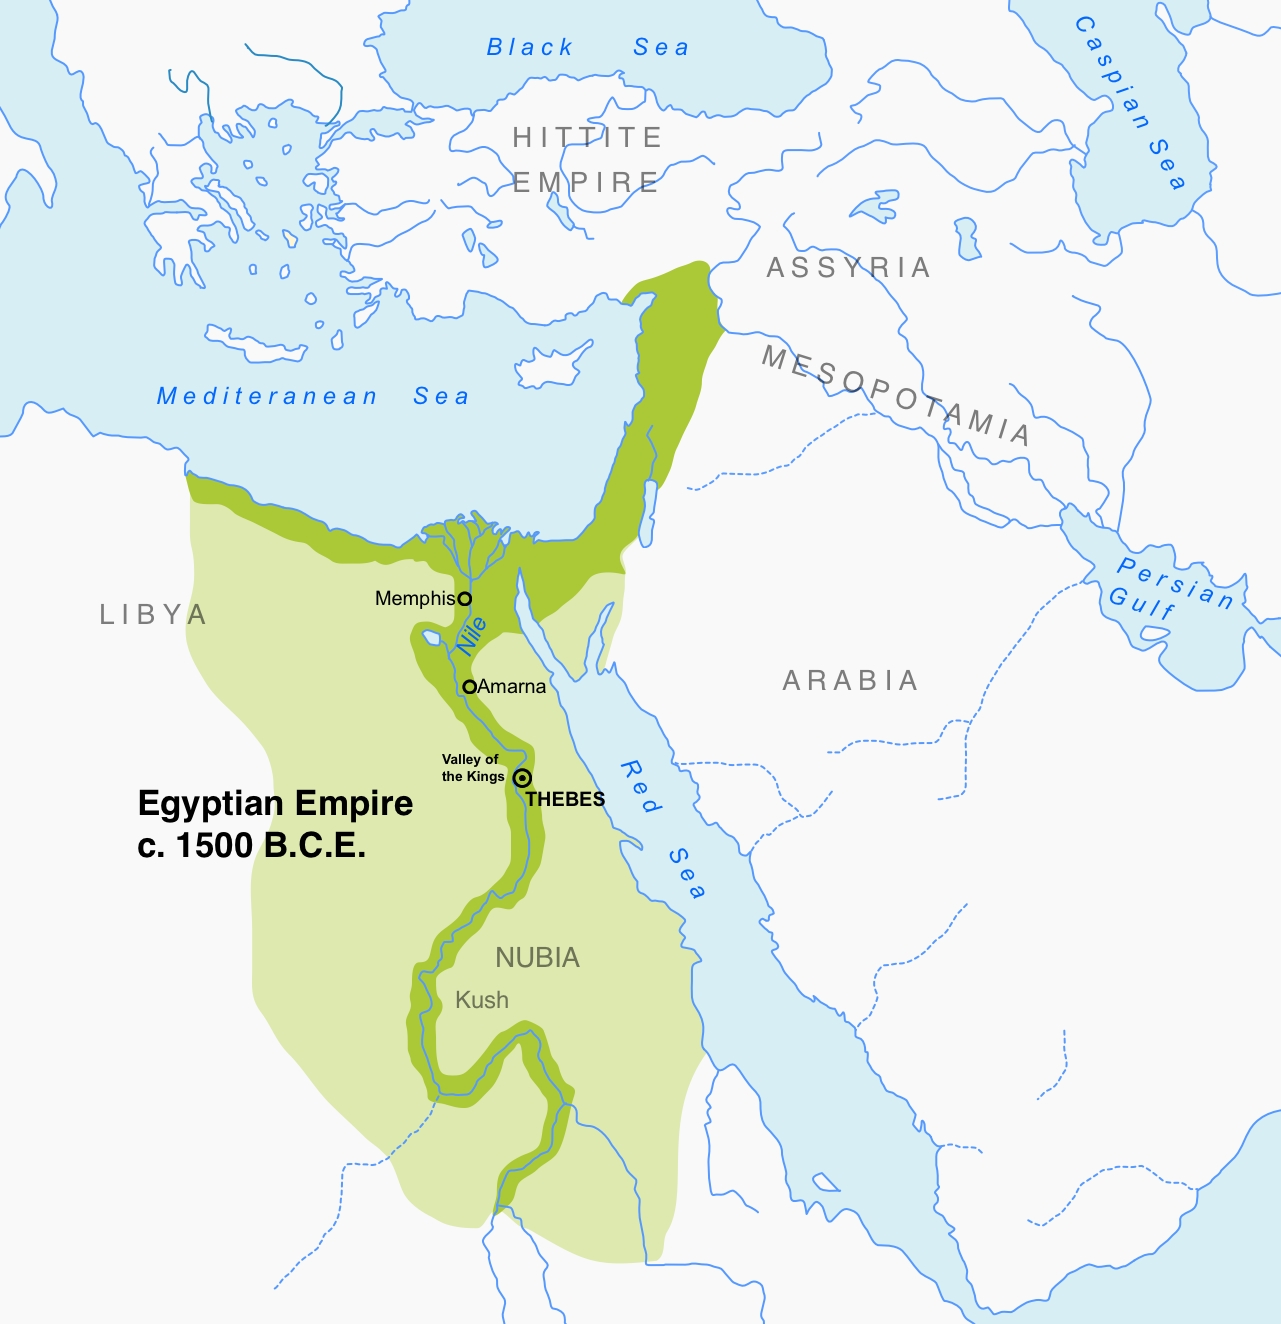 New Kingdom of the Egyptian Empire, c. 1500 B.C.E.